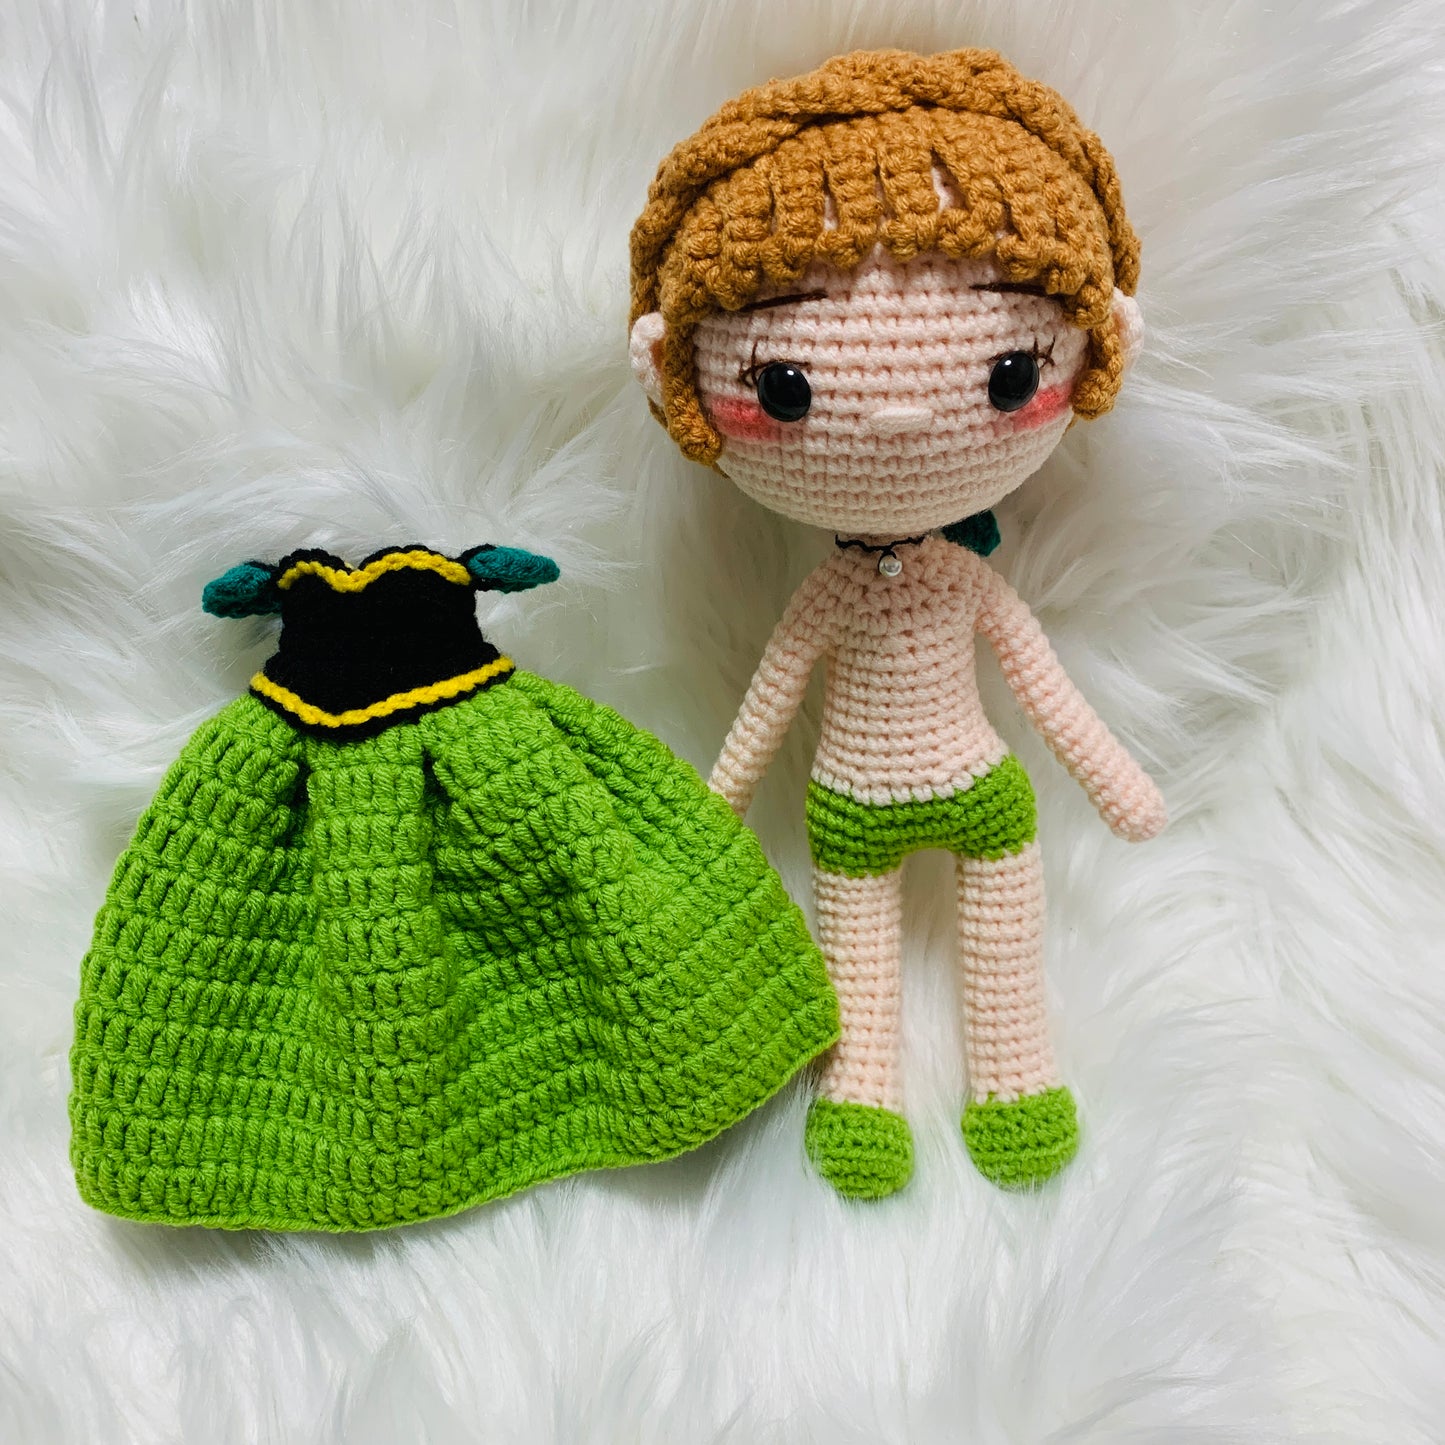 Disney Handmade Crochet Dolls